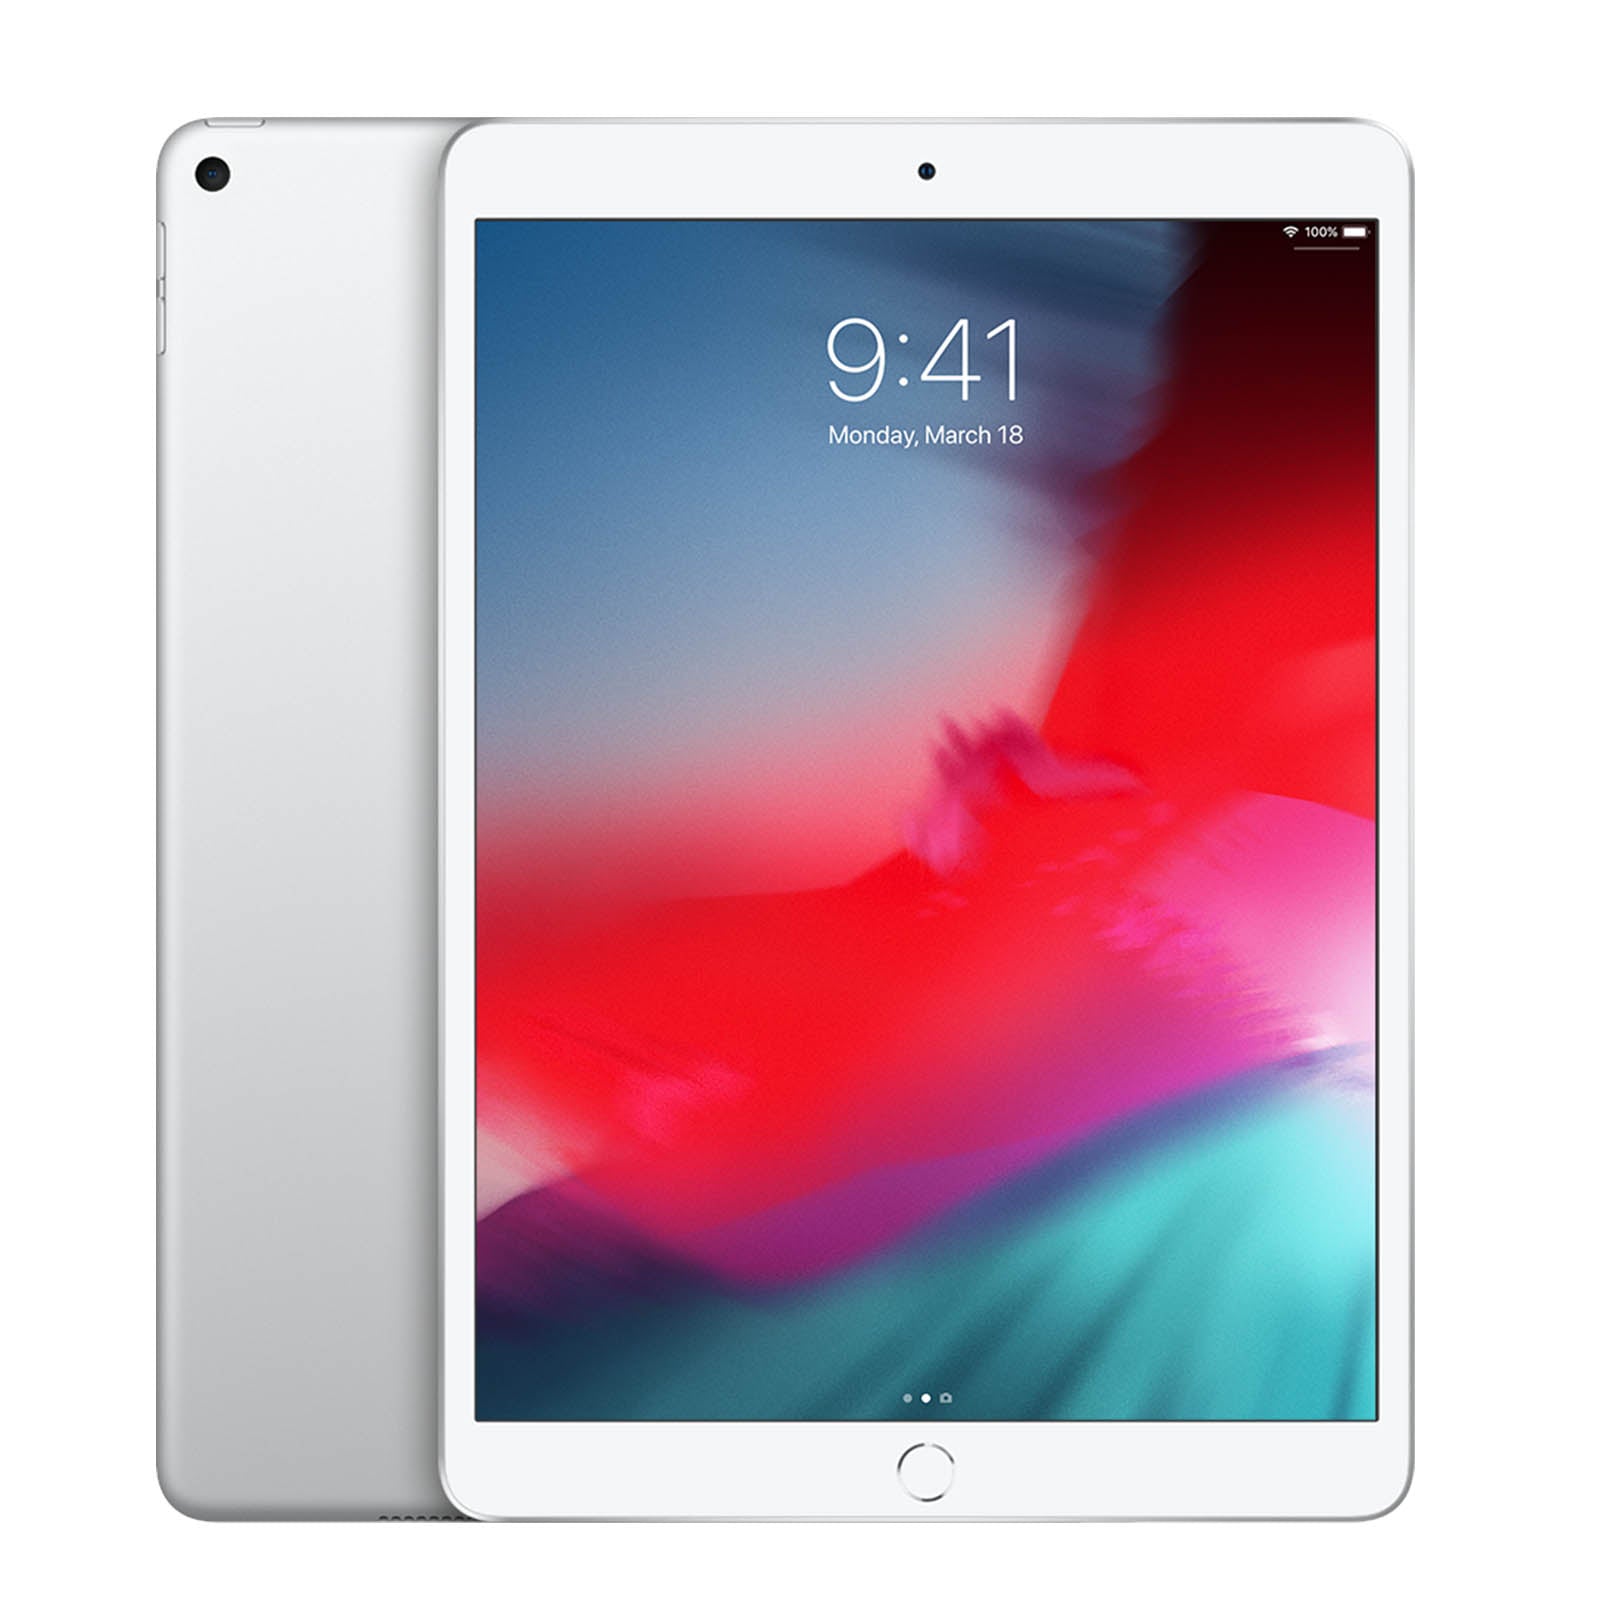 Apple iPad Air 3 64GB WiFi - Silver - Very Good 64GB Silver Very Good